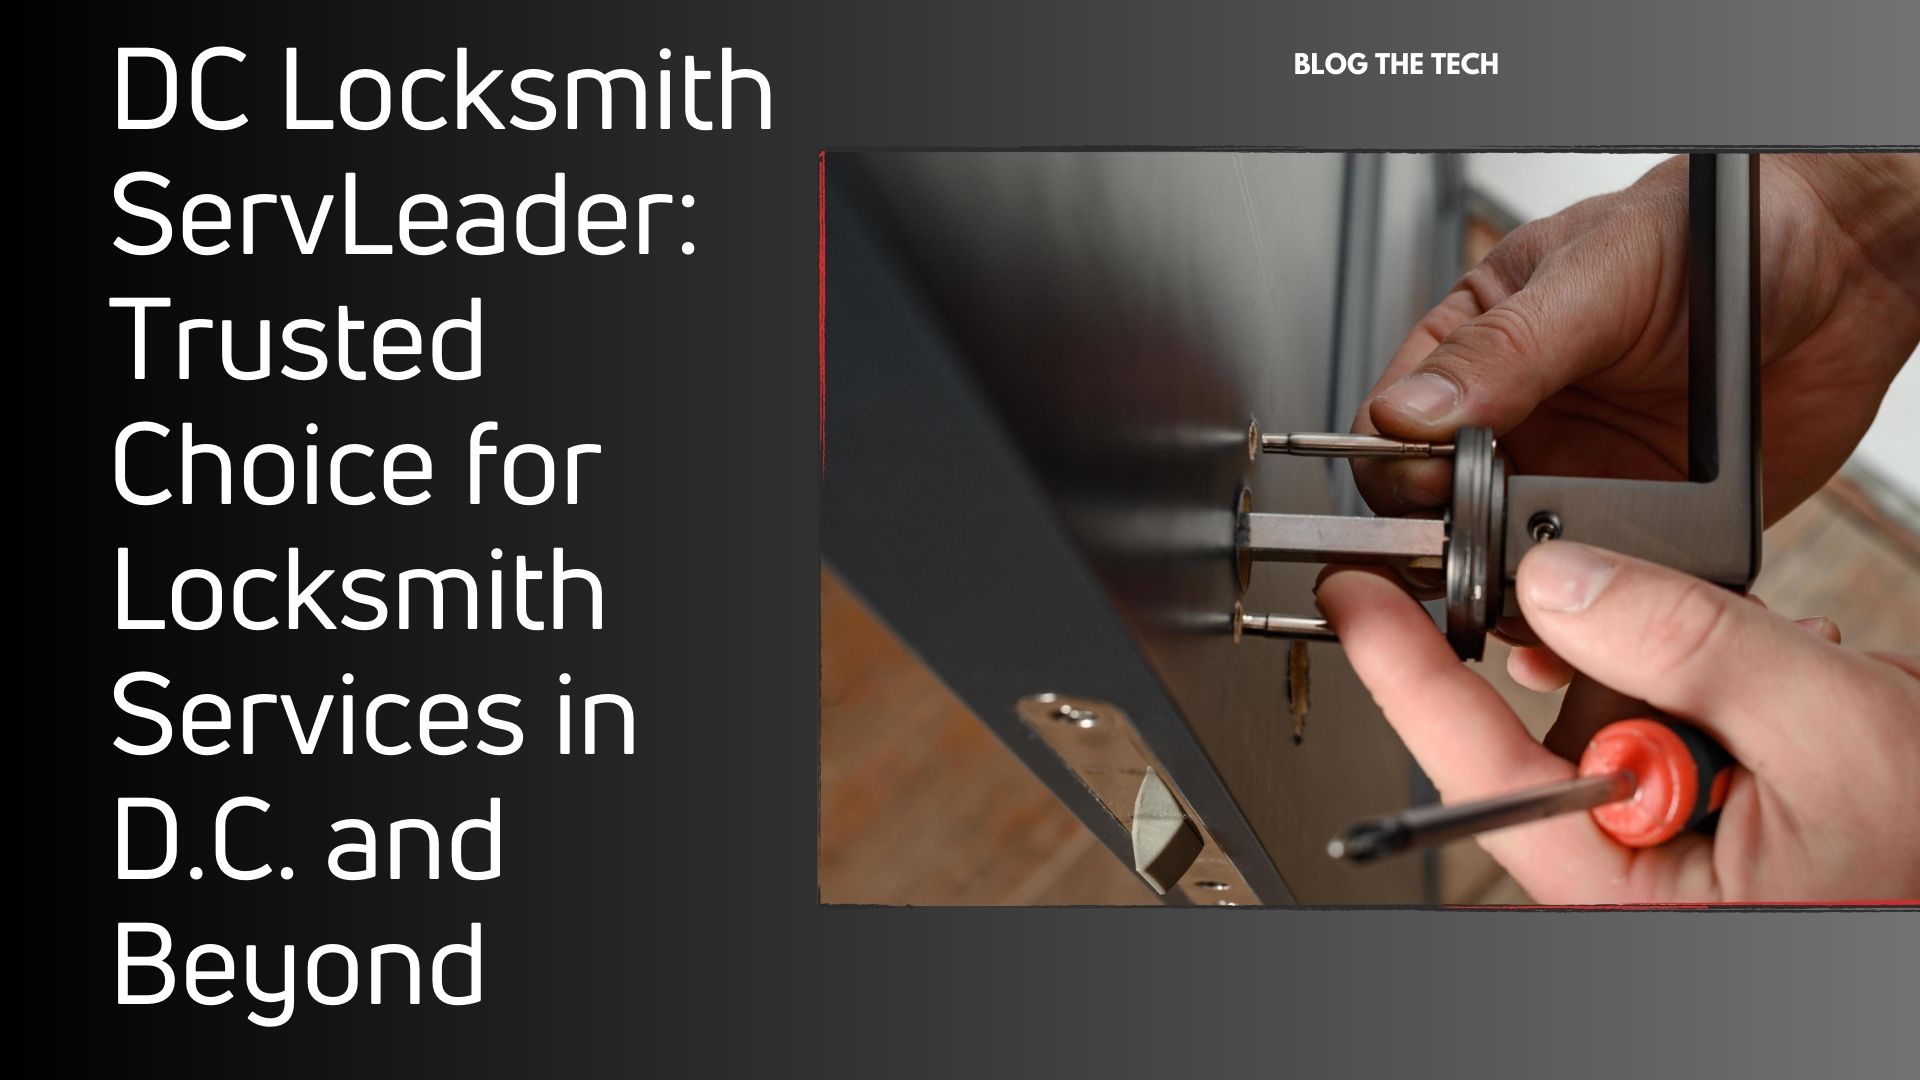 dc-locksmith-servleader-trusted-locksmith-services-in-d.c-featured